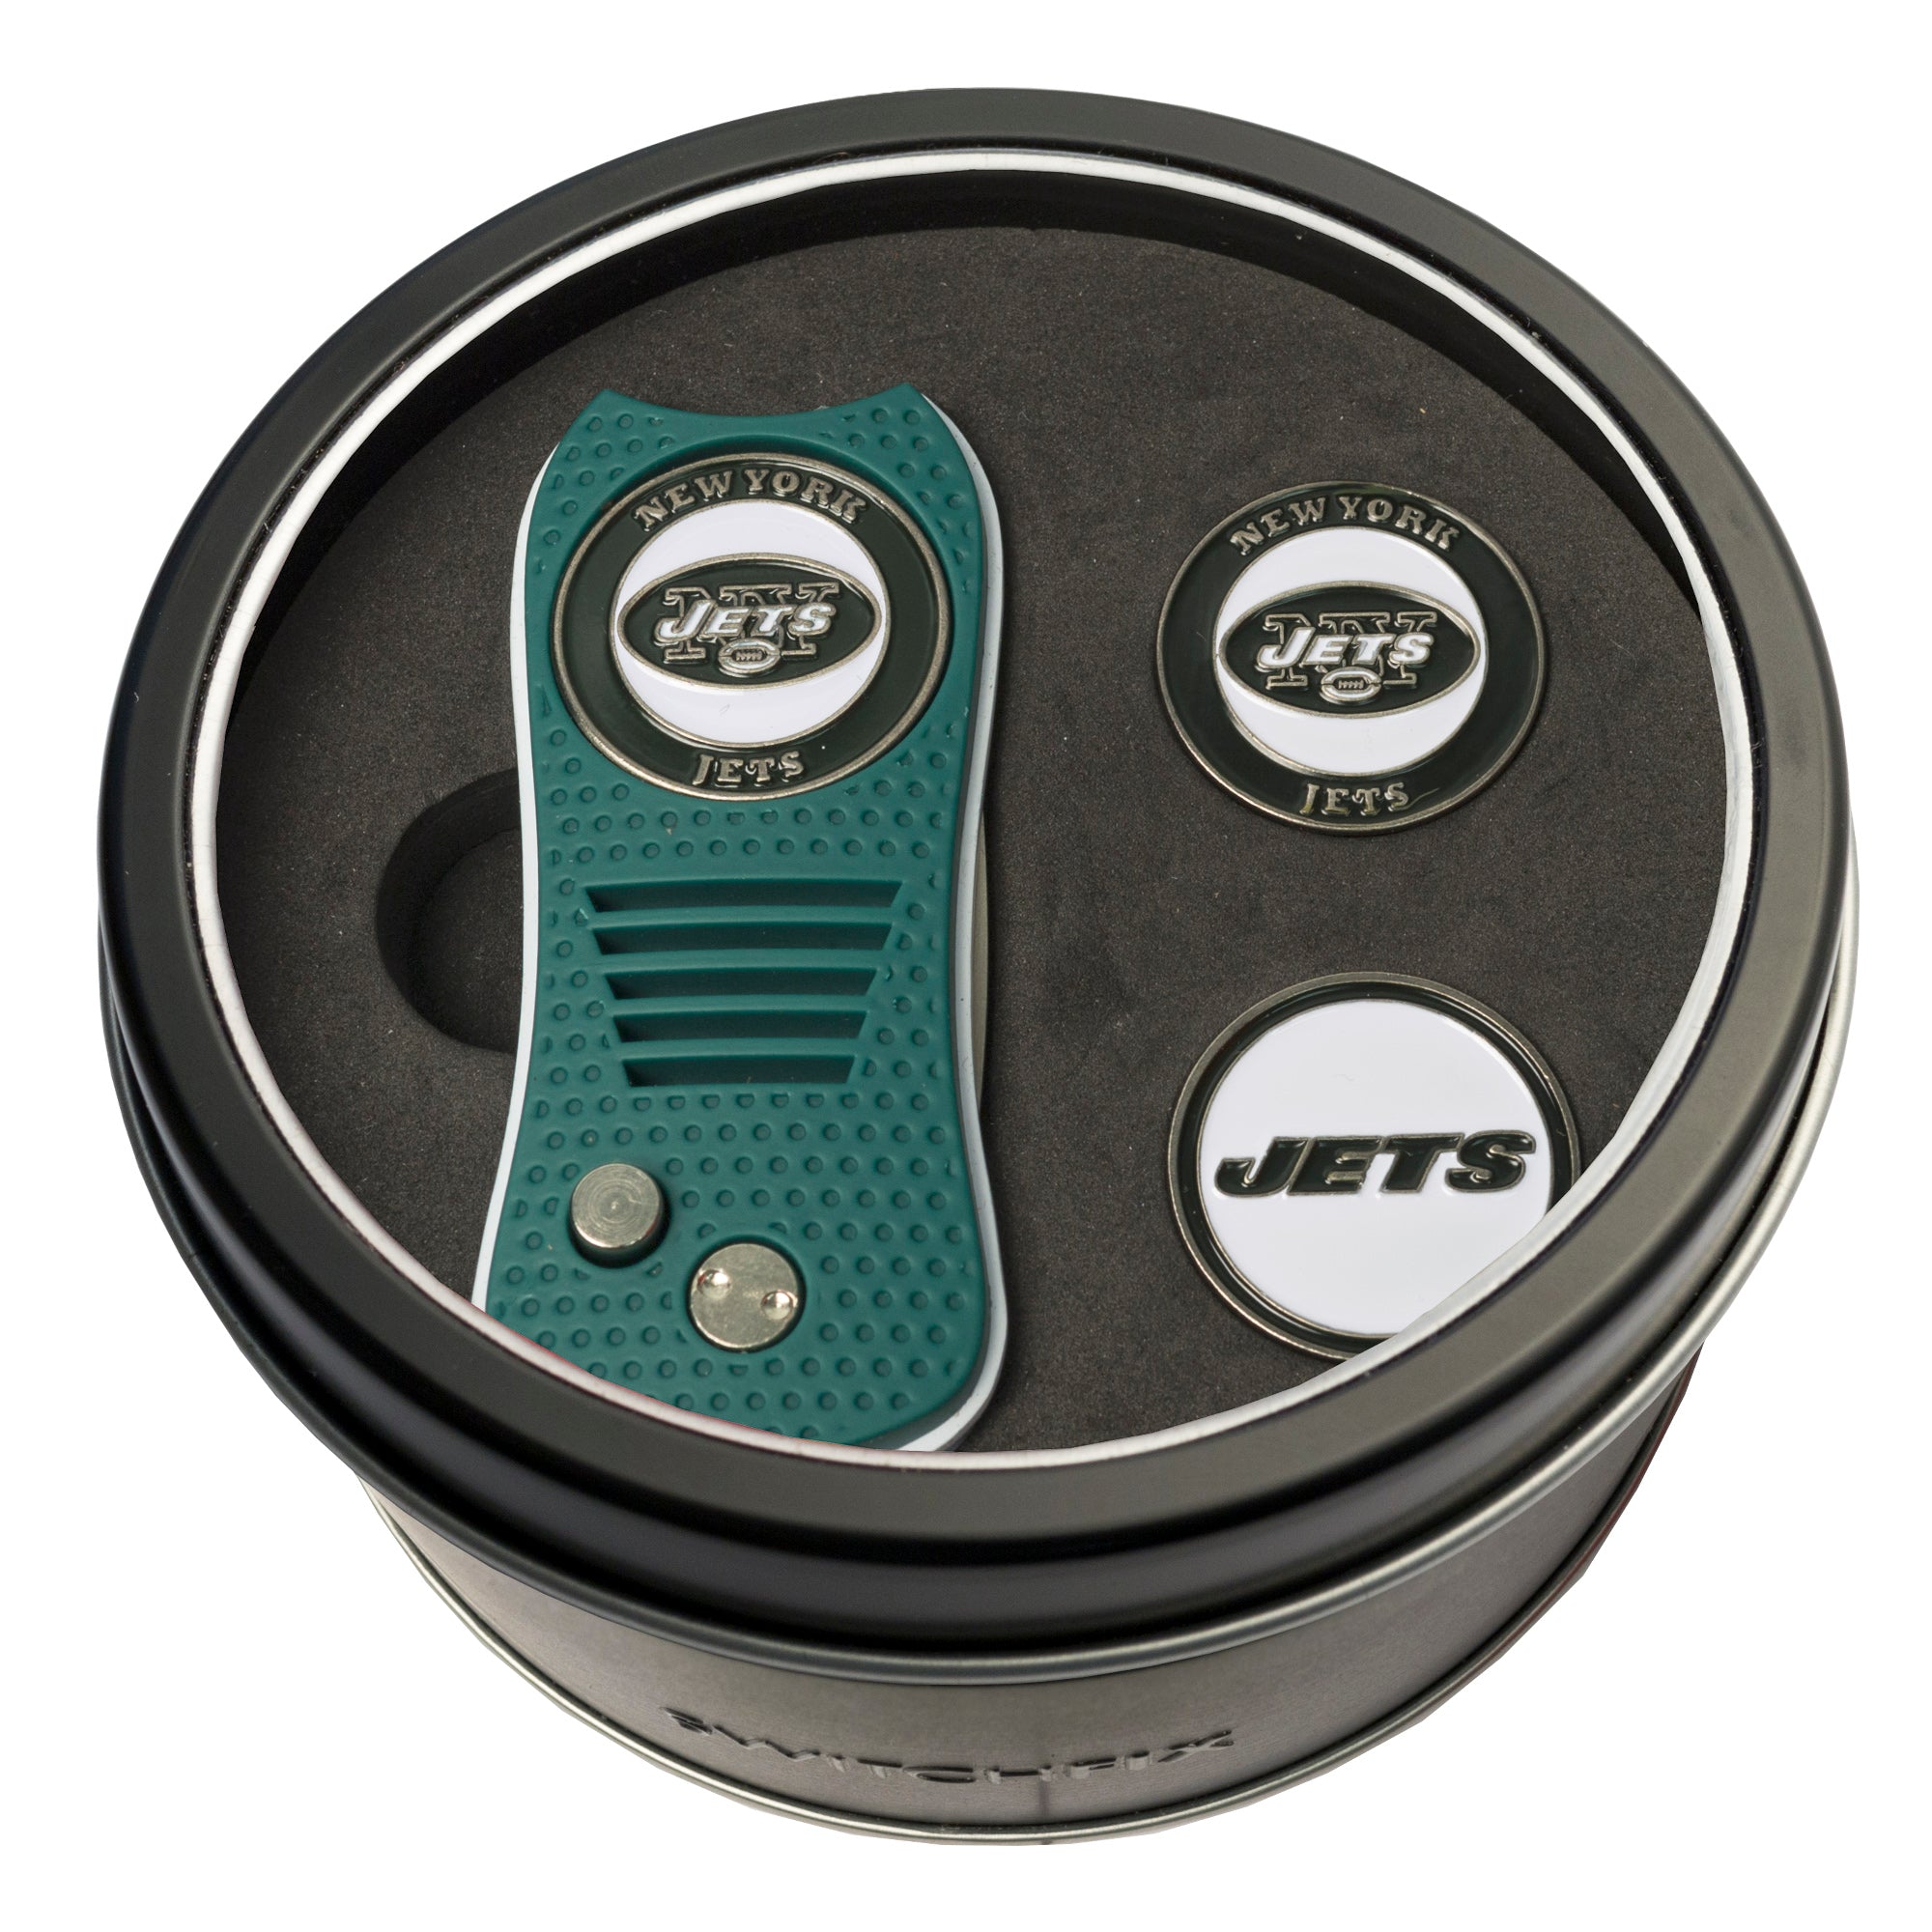 New York Jets Switchblade Divot Tool + 2 Ball Marker Tin Gift Set